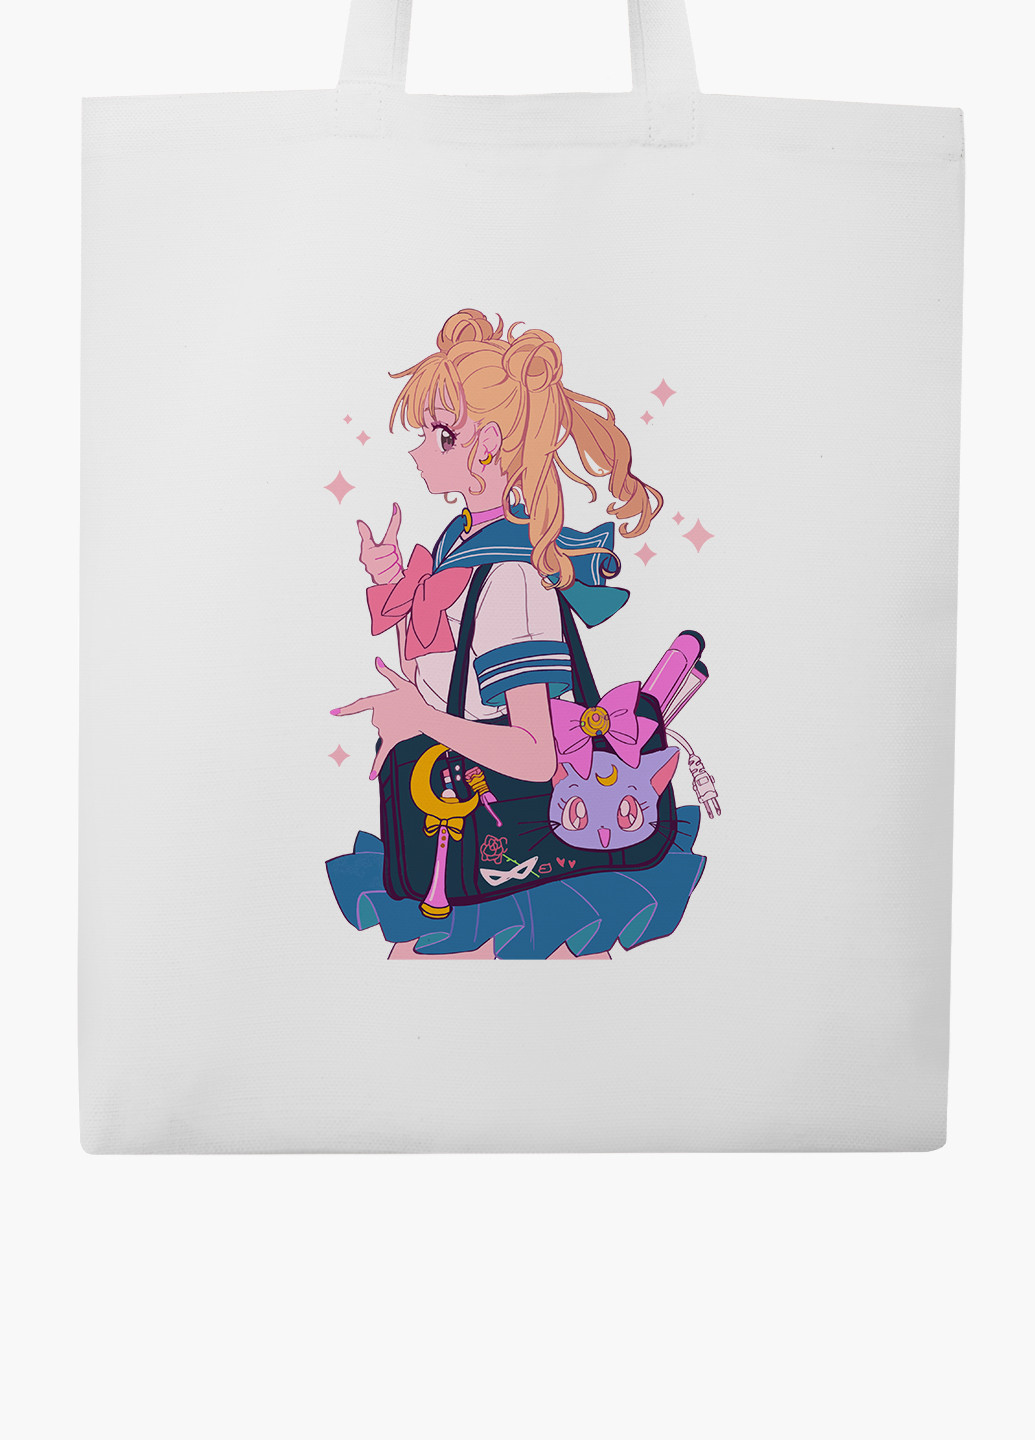 Эко сумка шоппер белая Сейлор Мун (Sailor Moon) (9227-2910-WT-2) экосумка шопер 41*35 см MobiPrint (224806070)